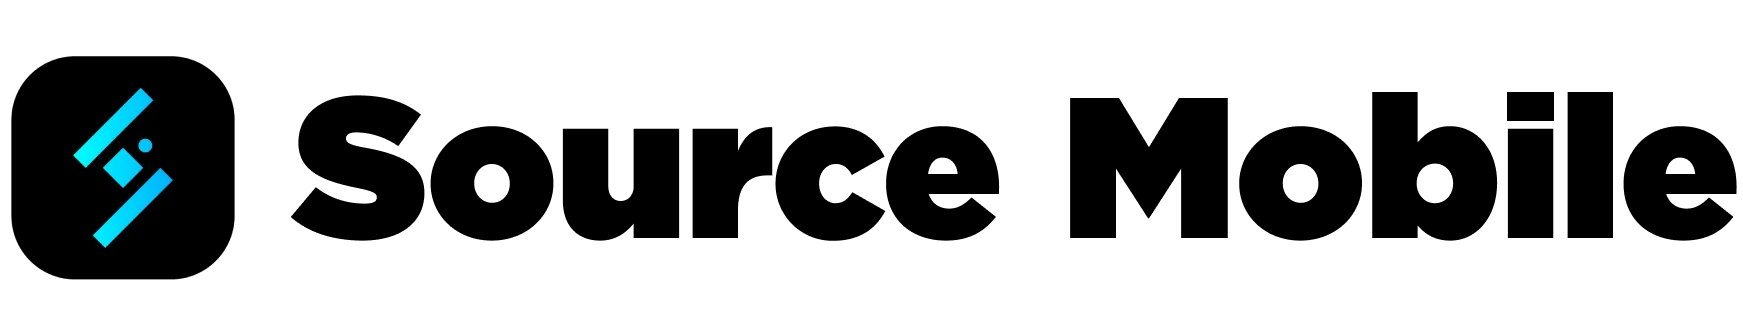 source mobile logo